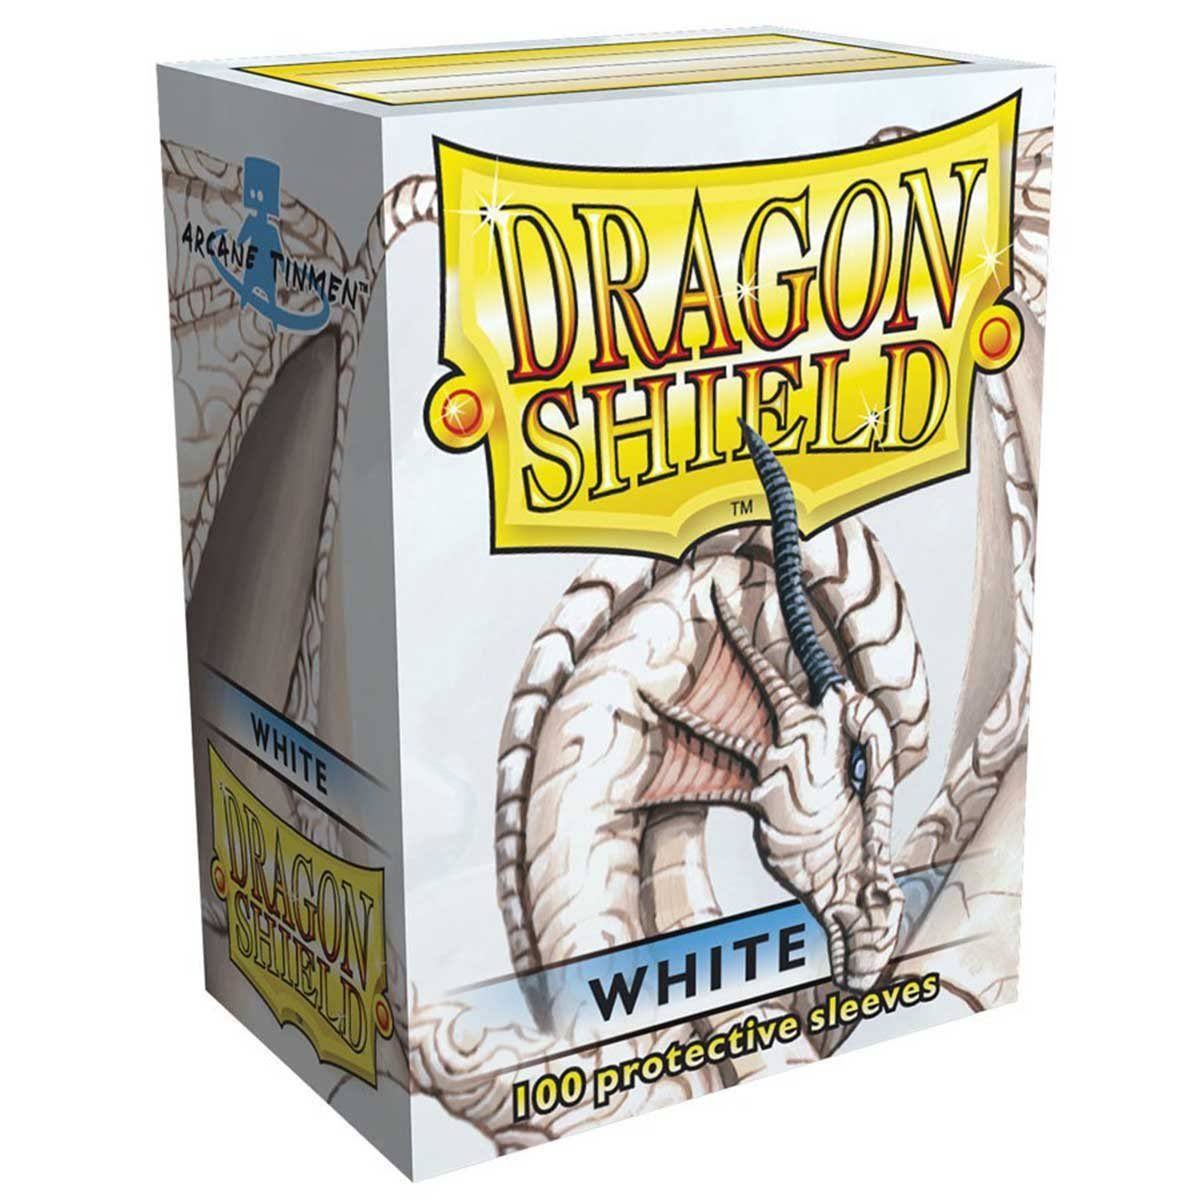 Dragon Shield Protective Sleeve - White, 100ct